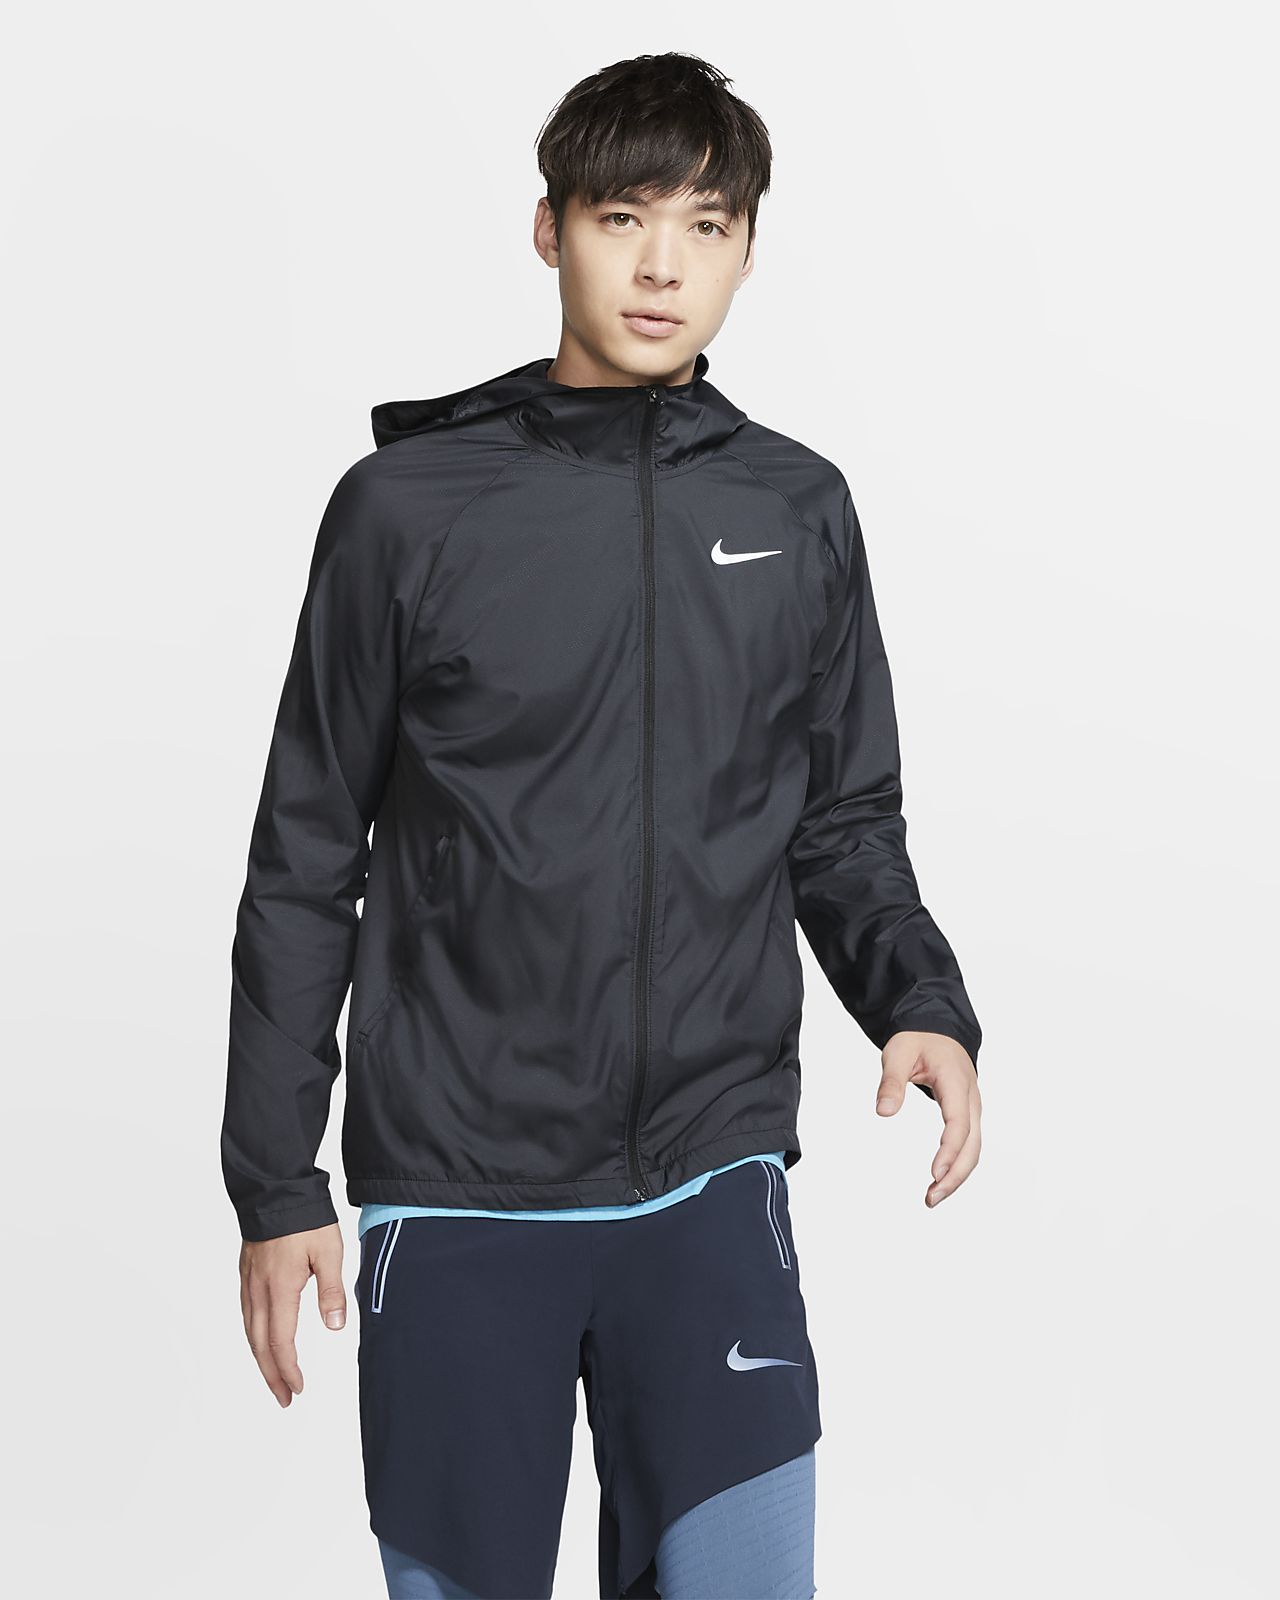 Nike Running Jacket Mens - Bios Pics